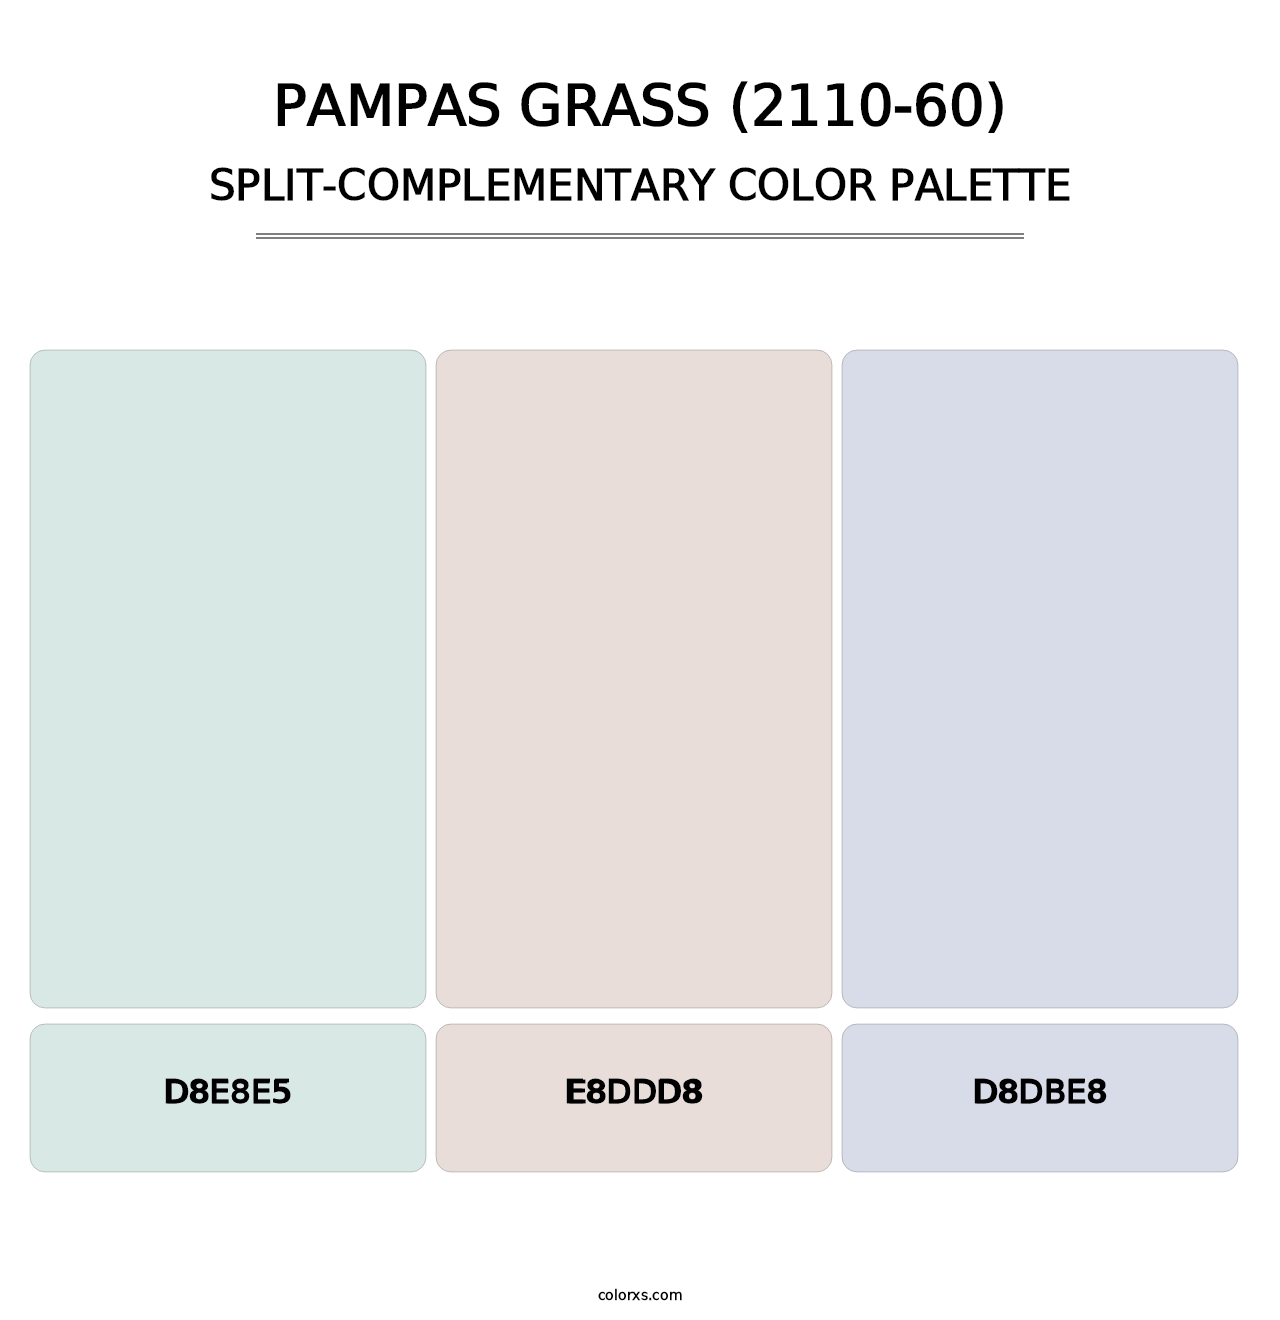 Pampas Grass (2110-60) - Split-Complementary Color Palette